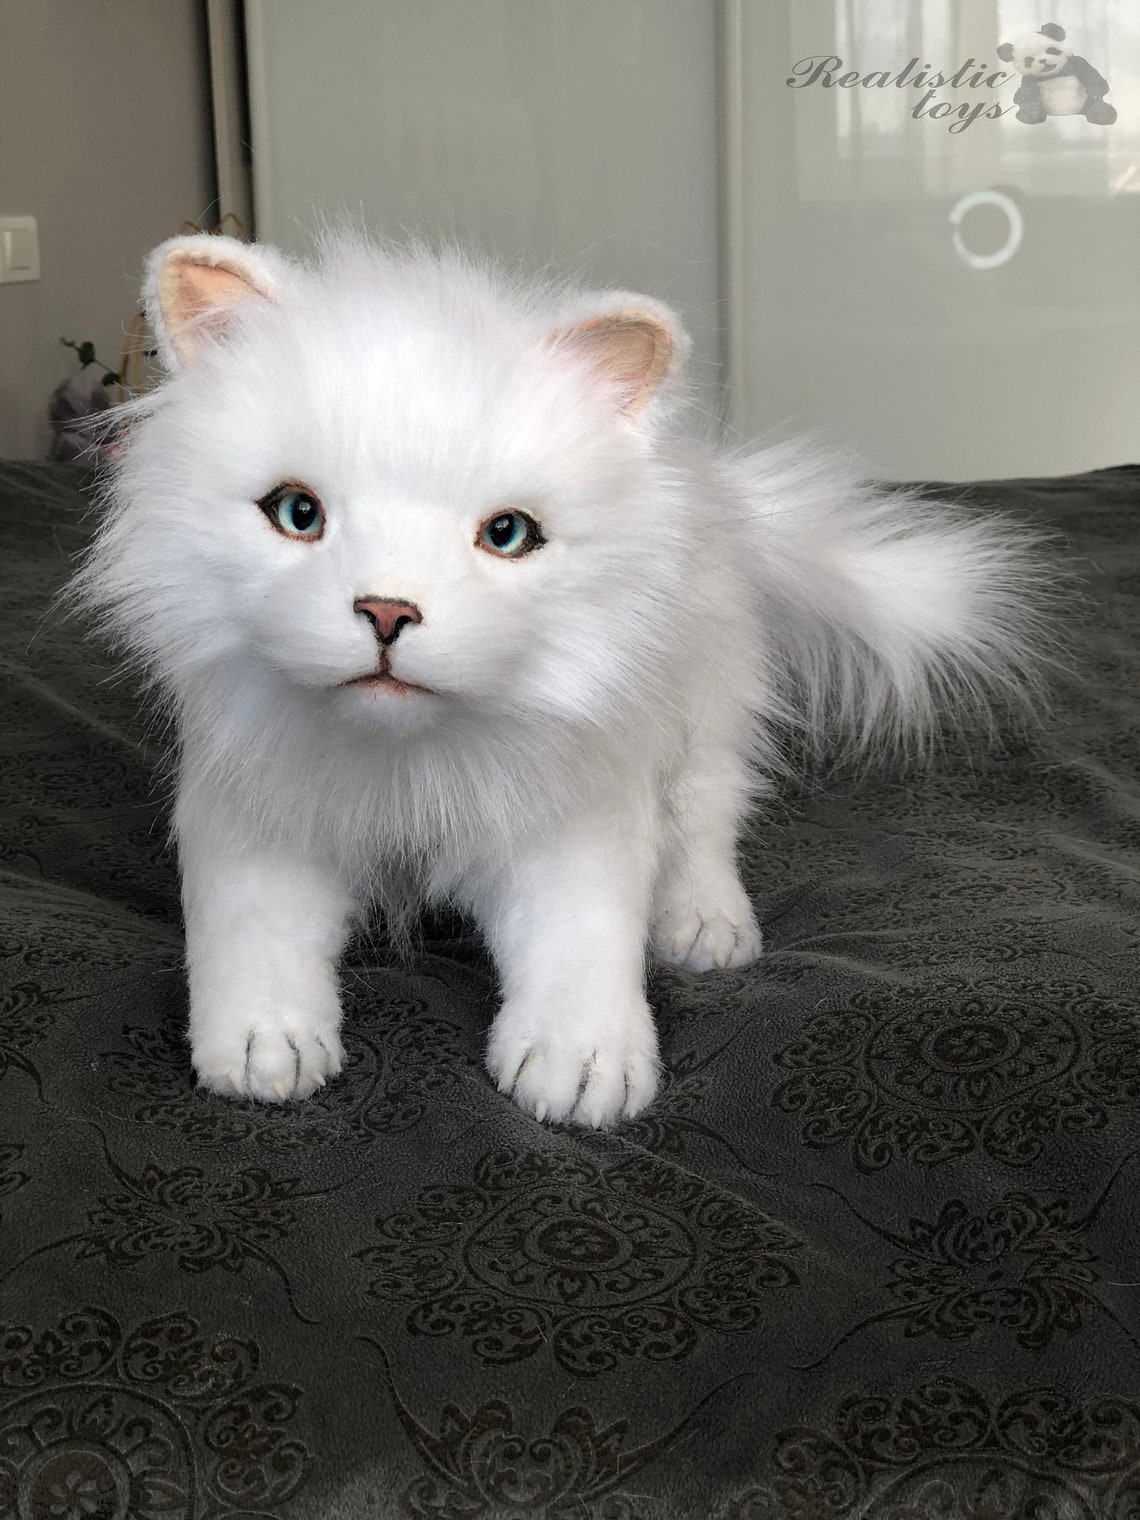 Realistic white cat toy cat stuffed animal kitten toy OOAK | Etsy